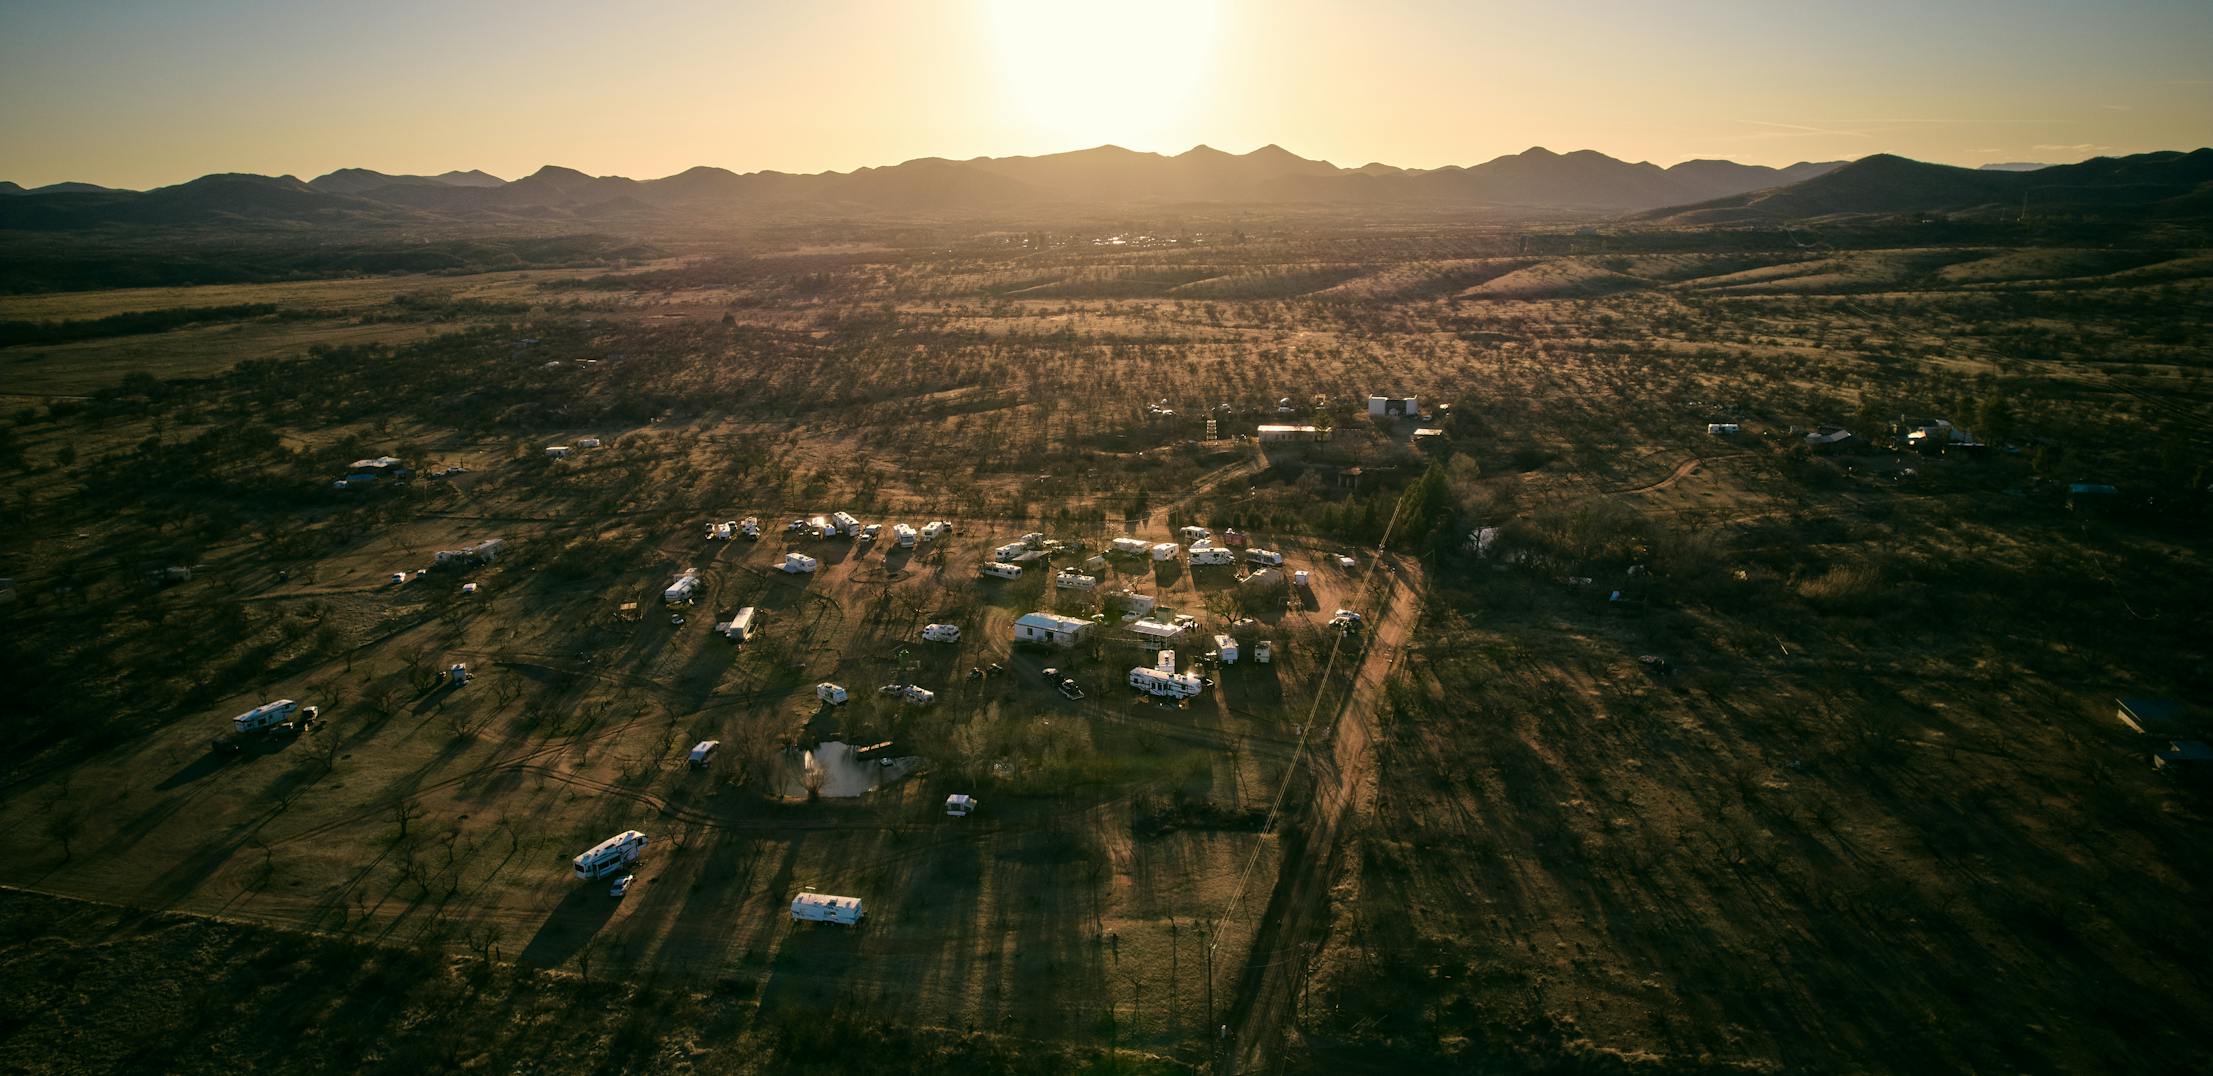 La siesta Campground in Arivaca Arizona